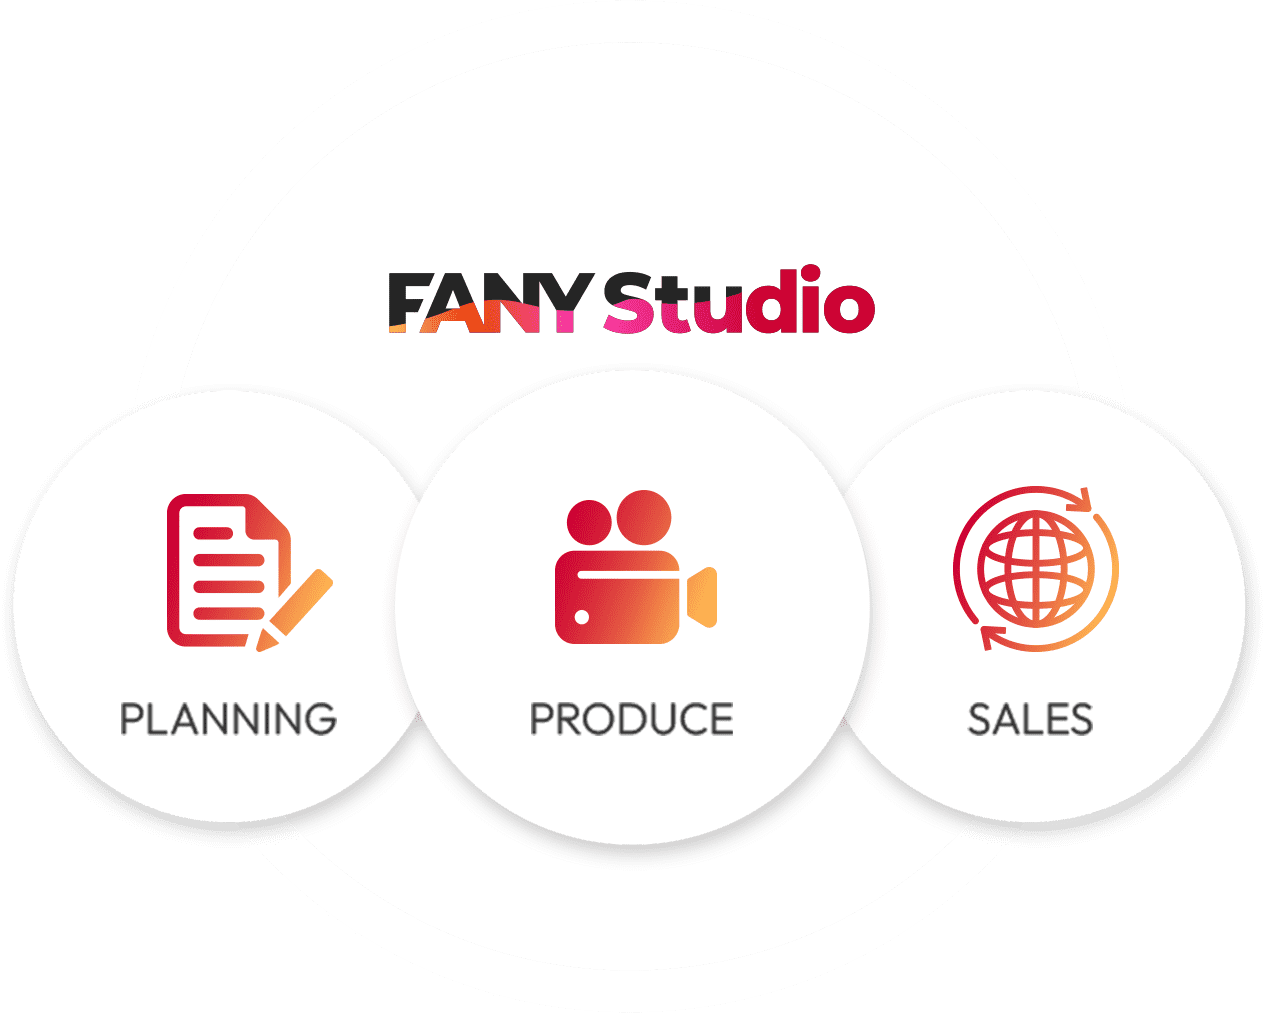 FANY Studioを説明する図